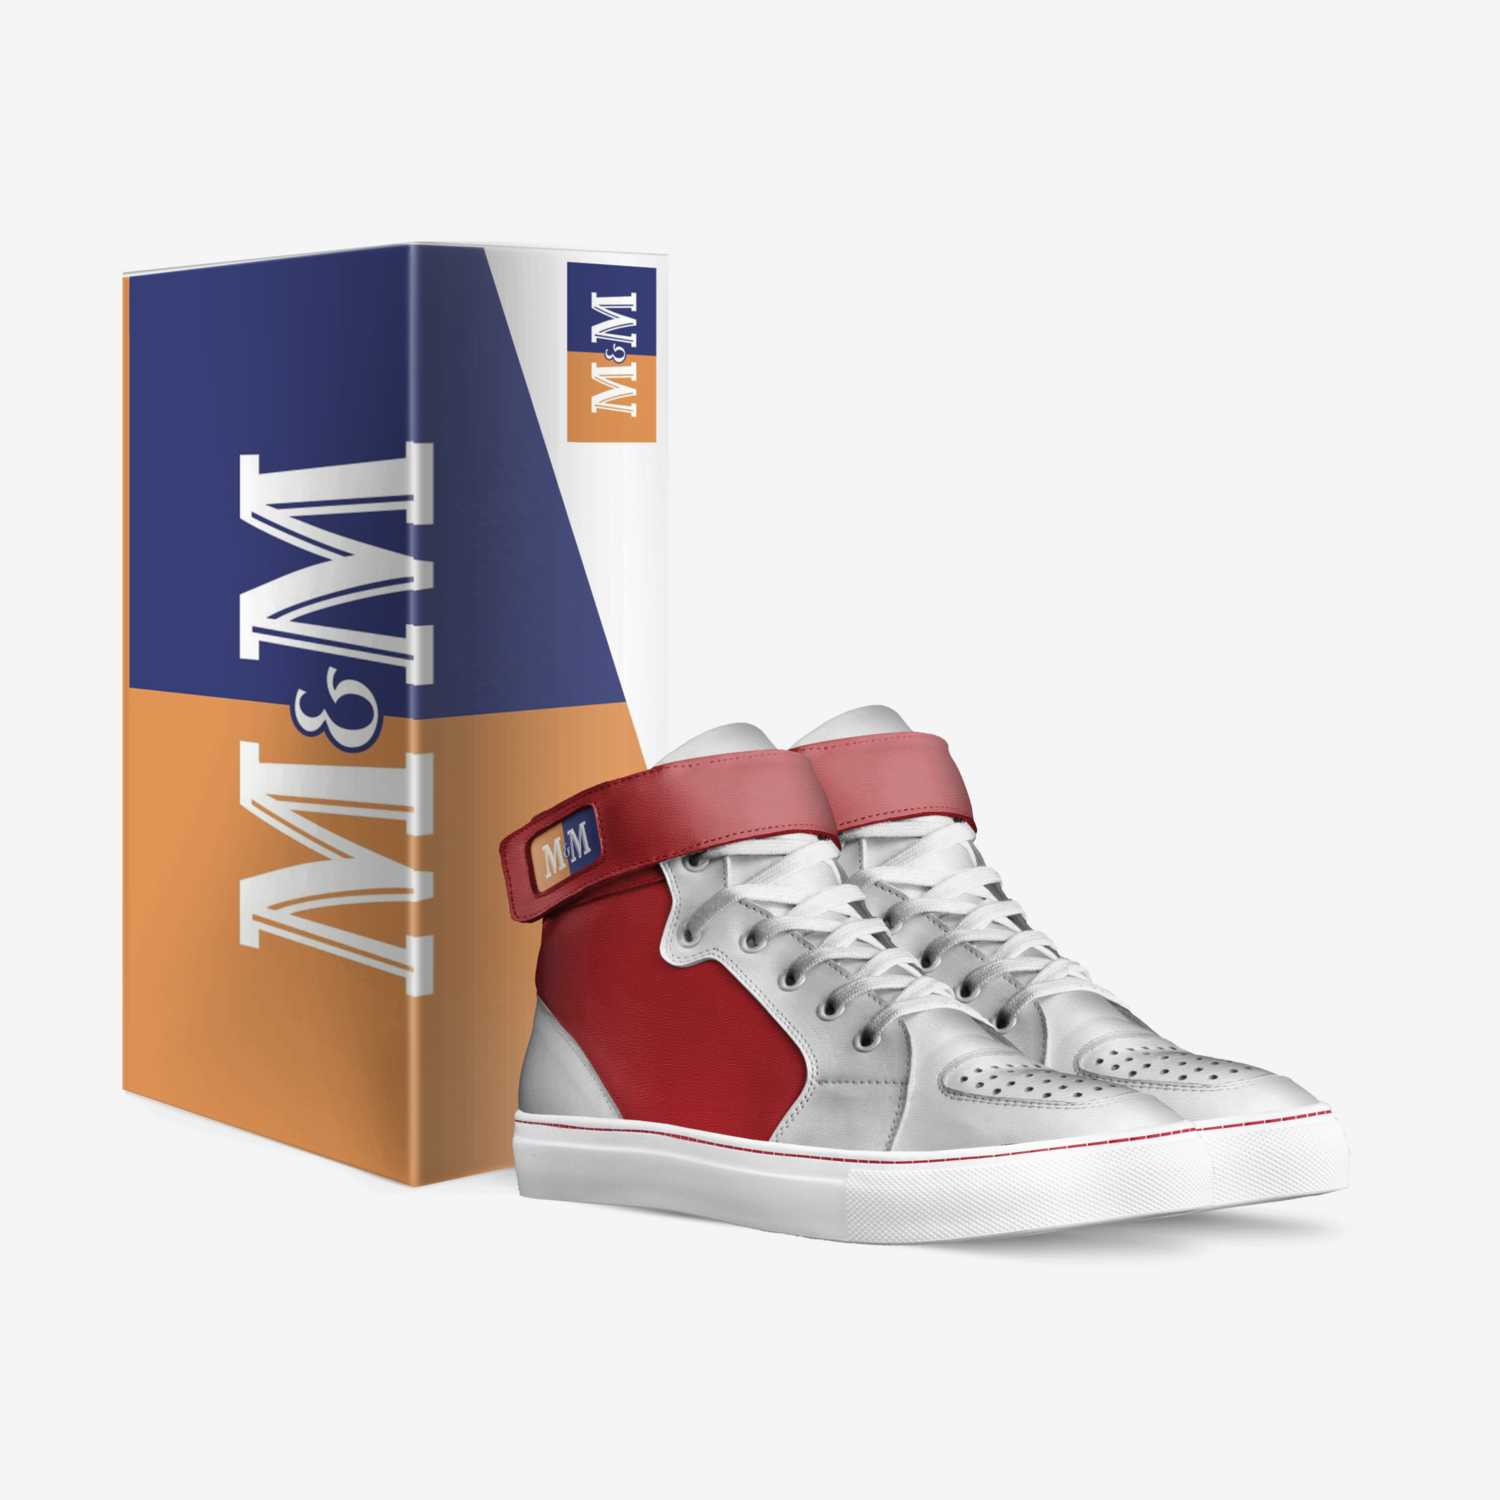 M&M custom made in Italy shoes by Melih Güçlü | Box view